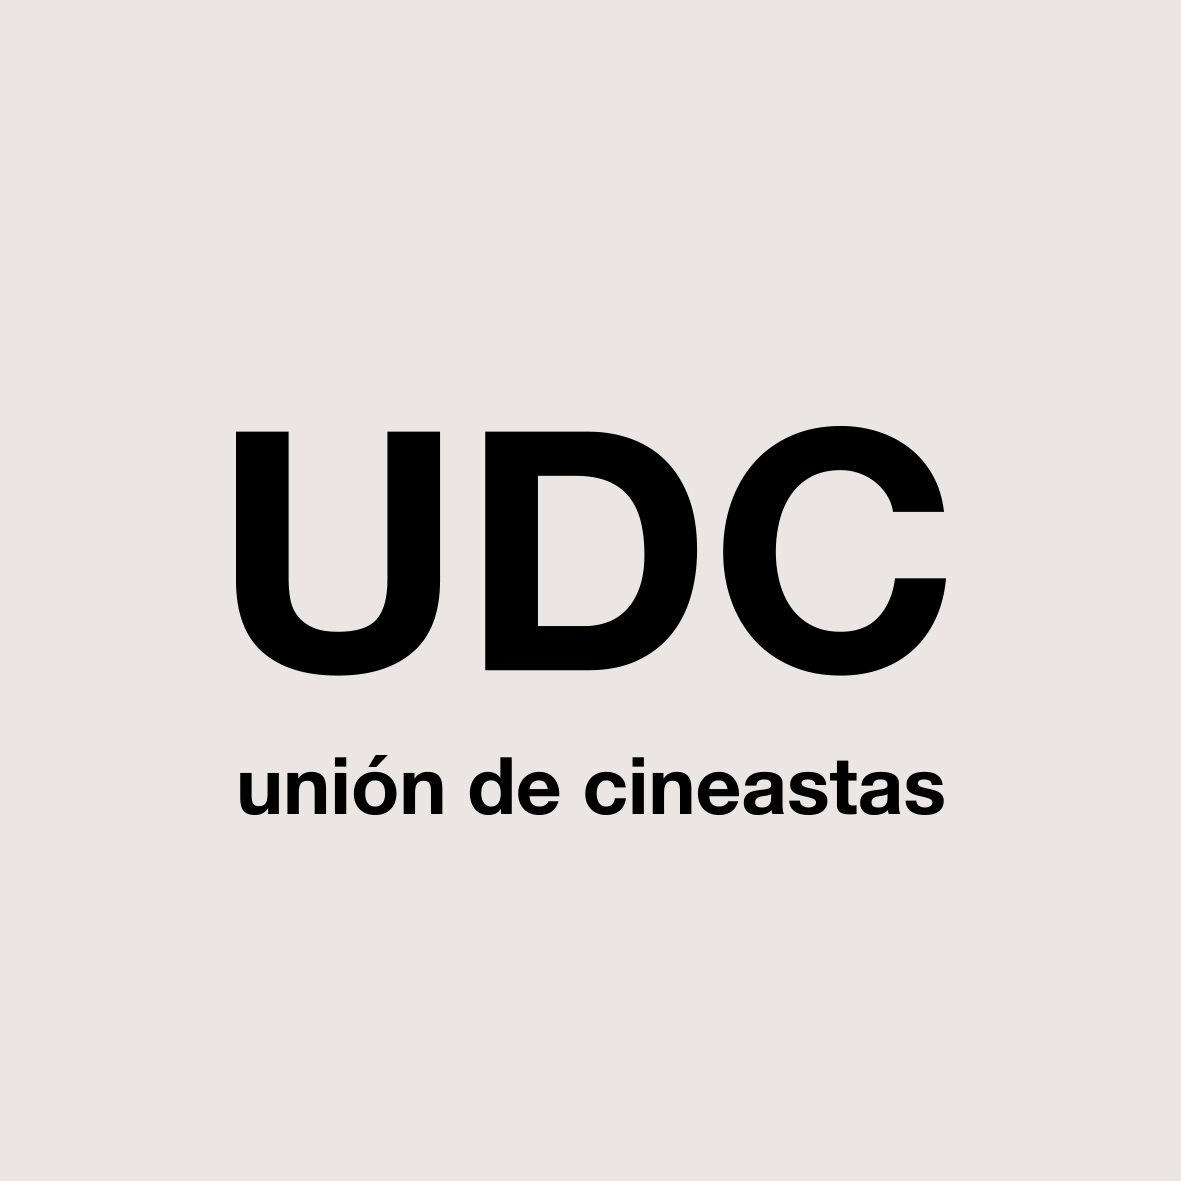 logo_union_de_cineastas_c1.jpg